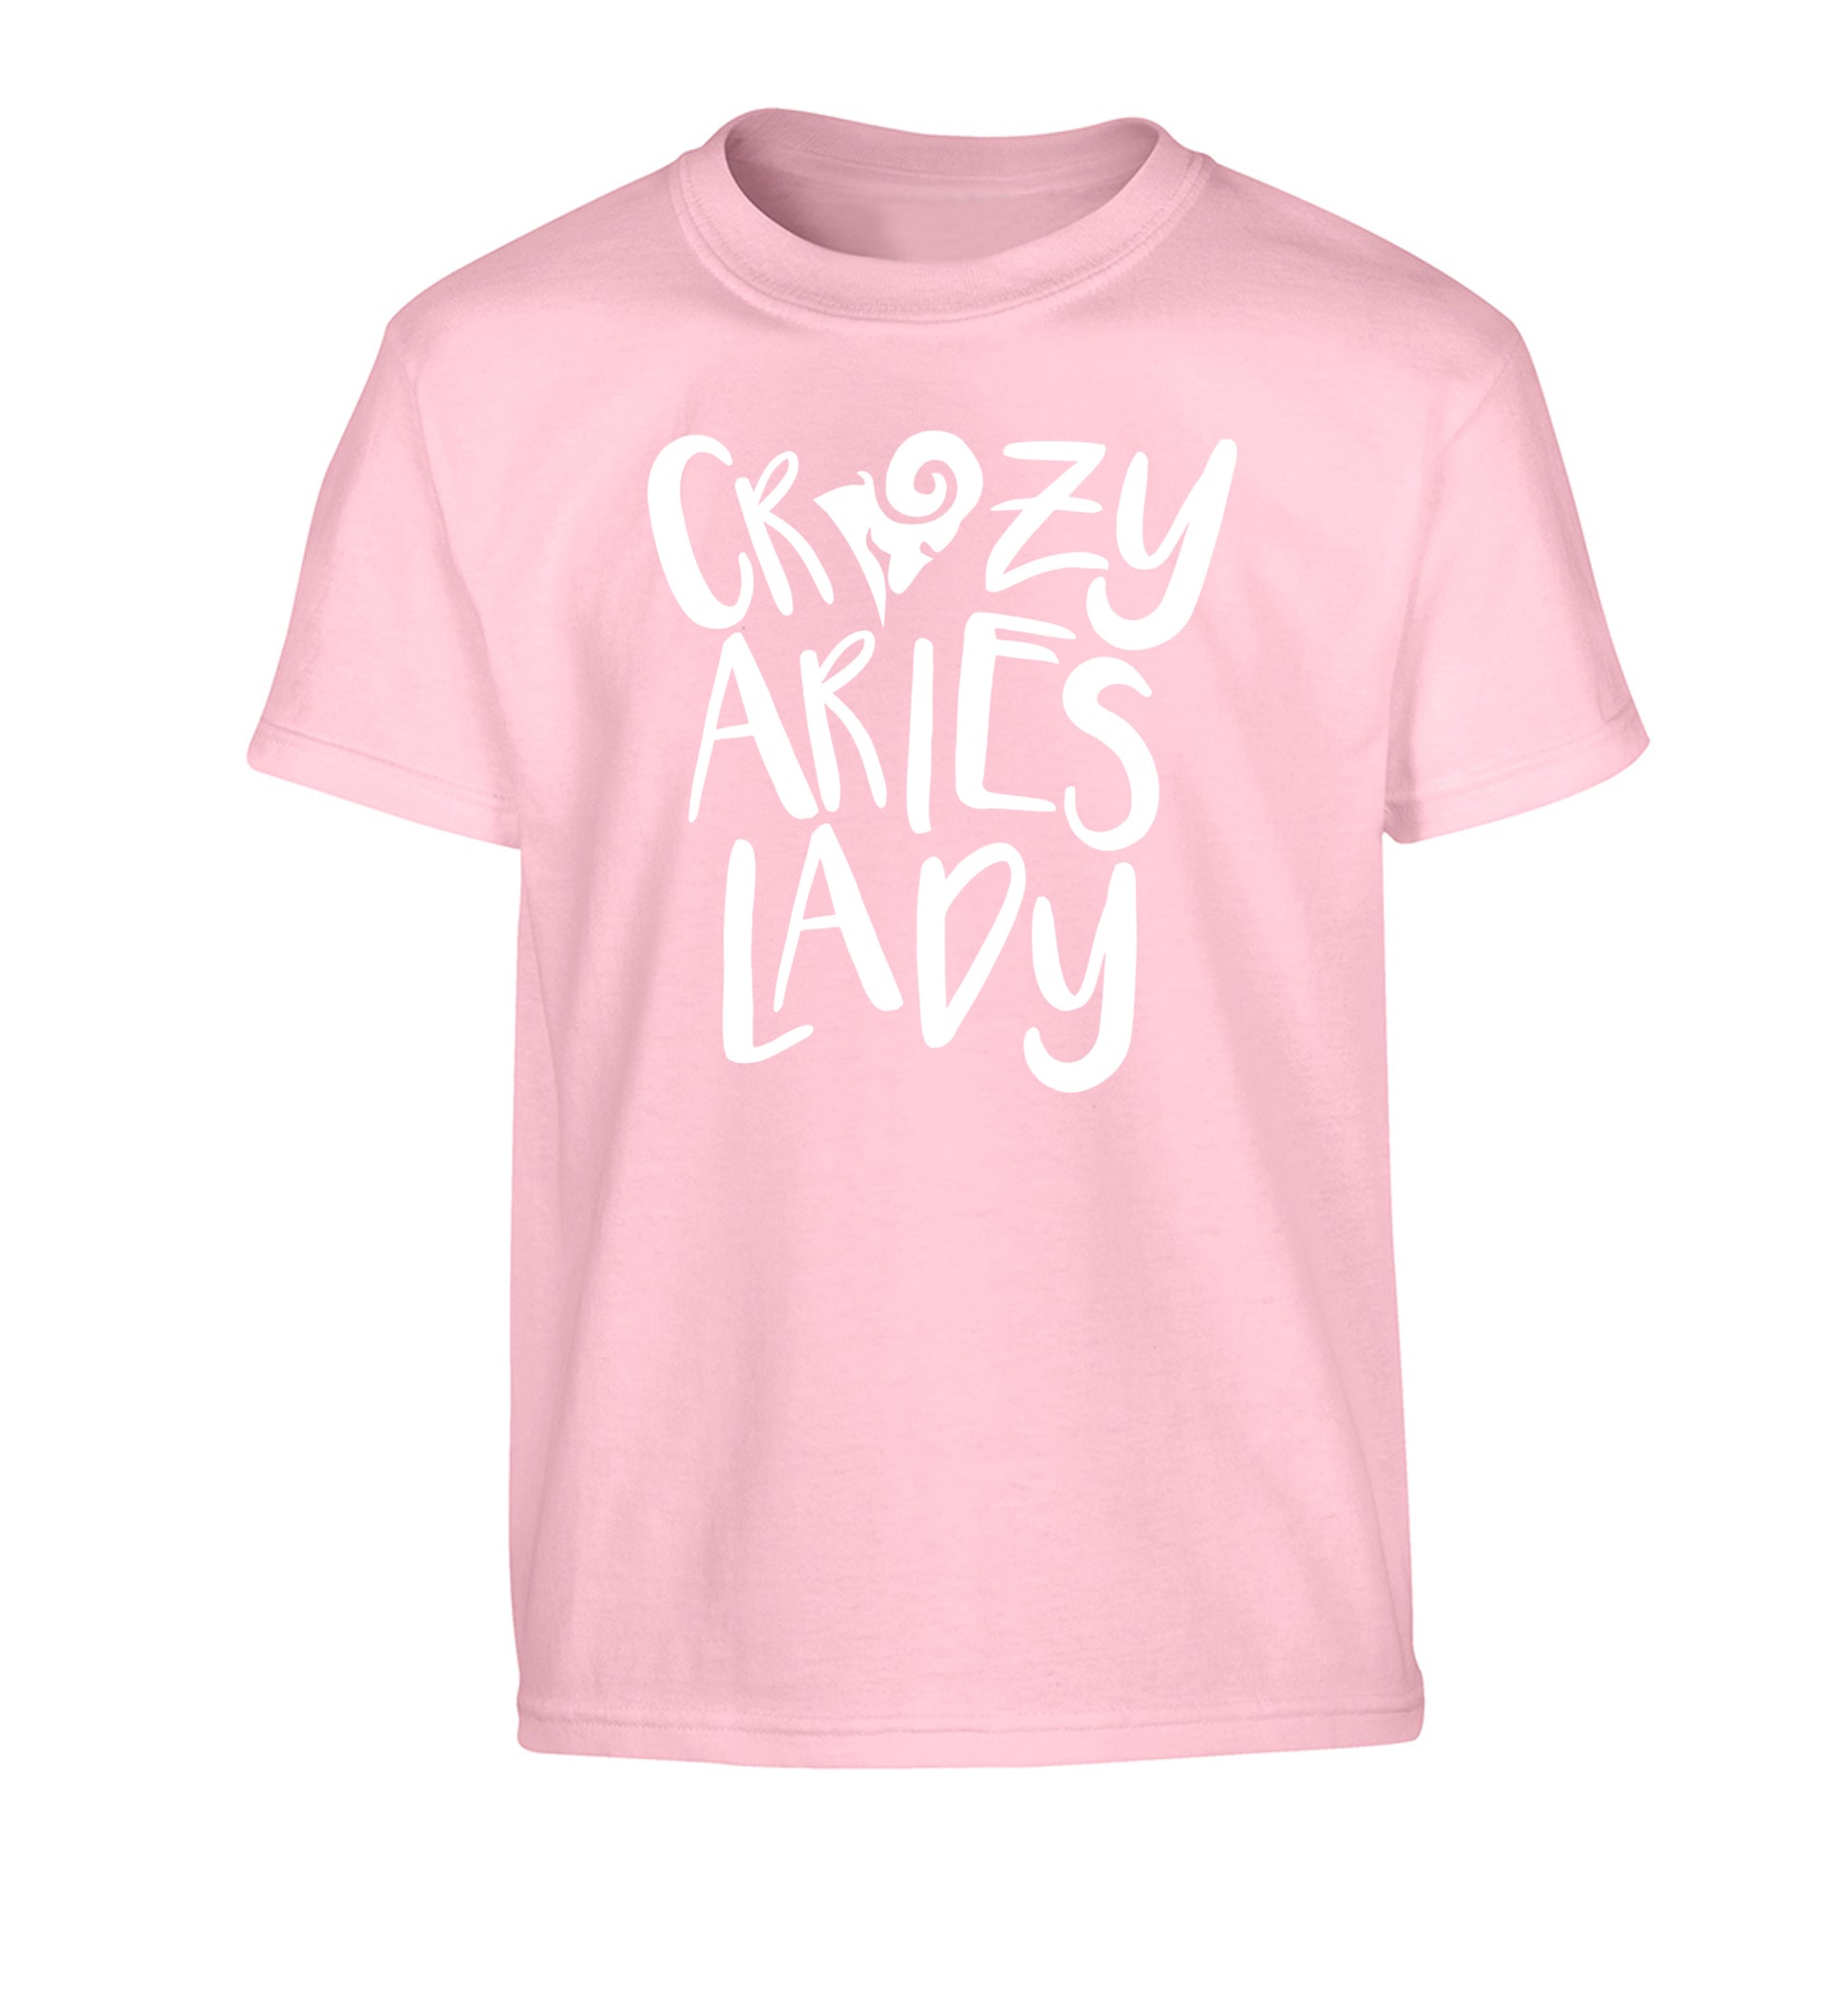 Crazy aries lady Children's light pink Tshirt 12-13 Years